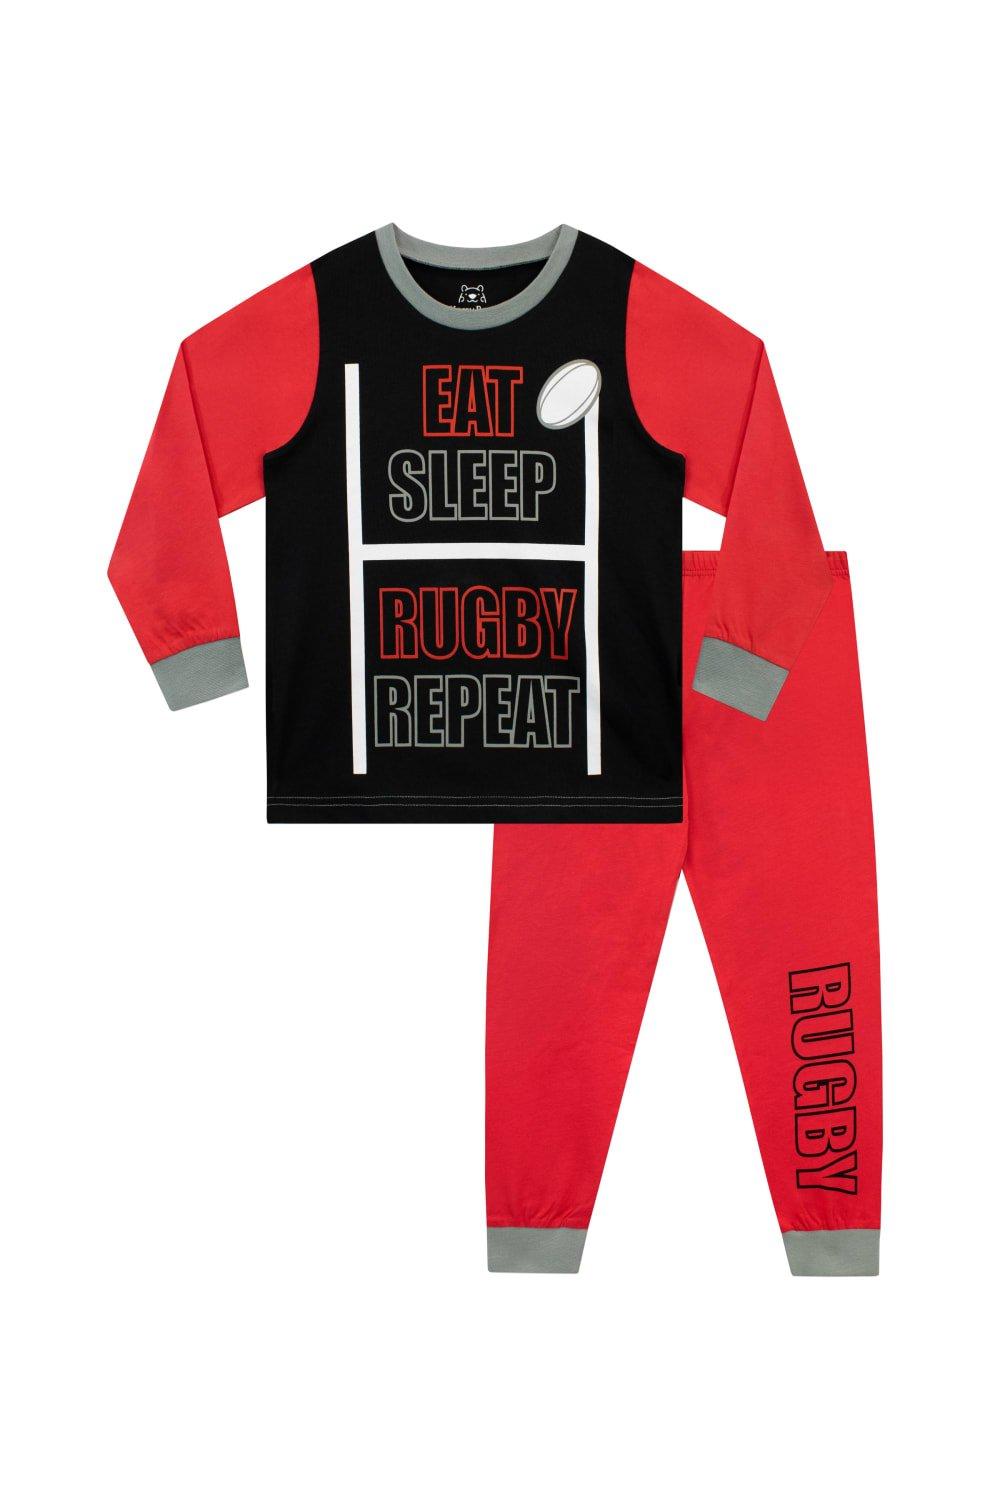 Eat Sleep Rugby Pyjamas